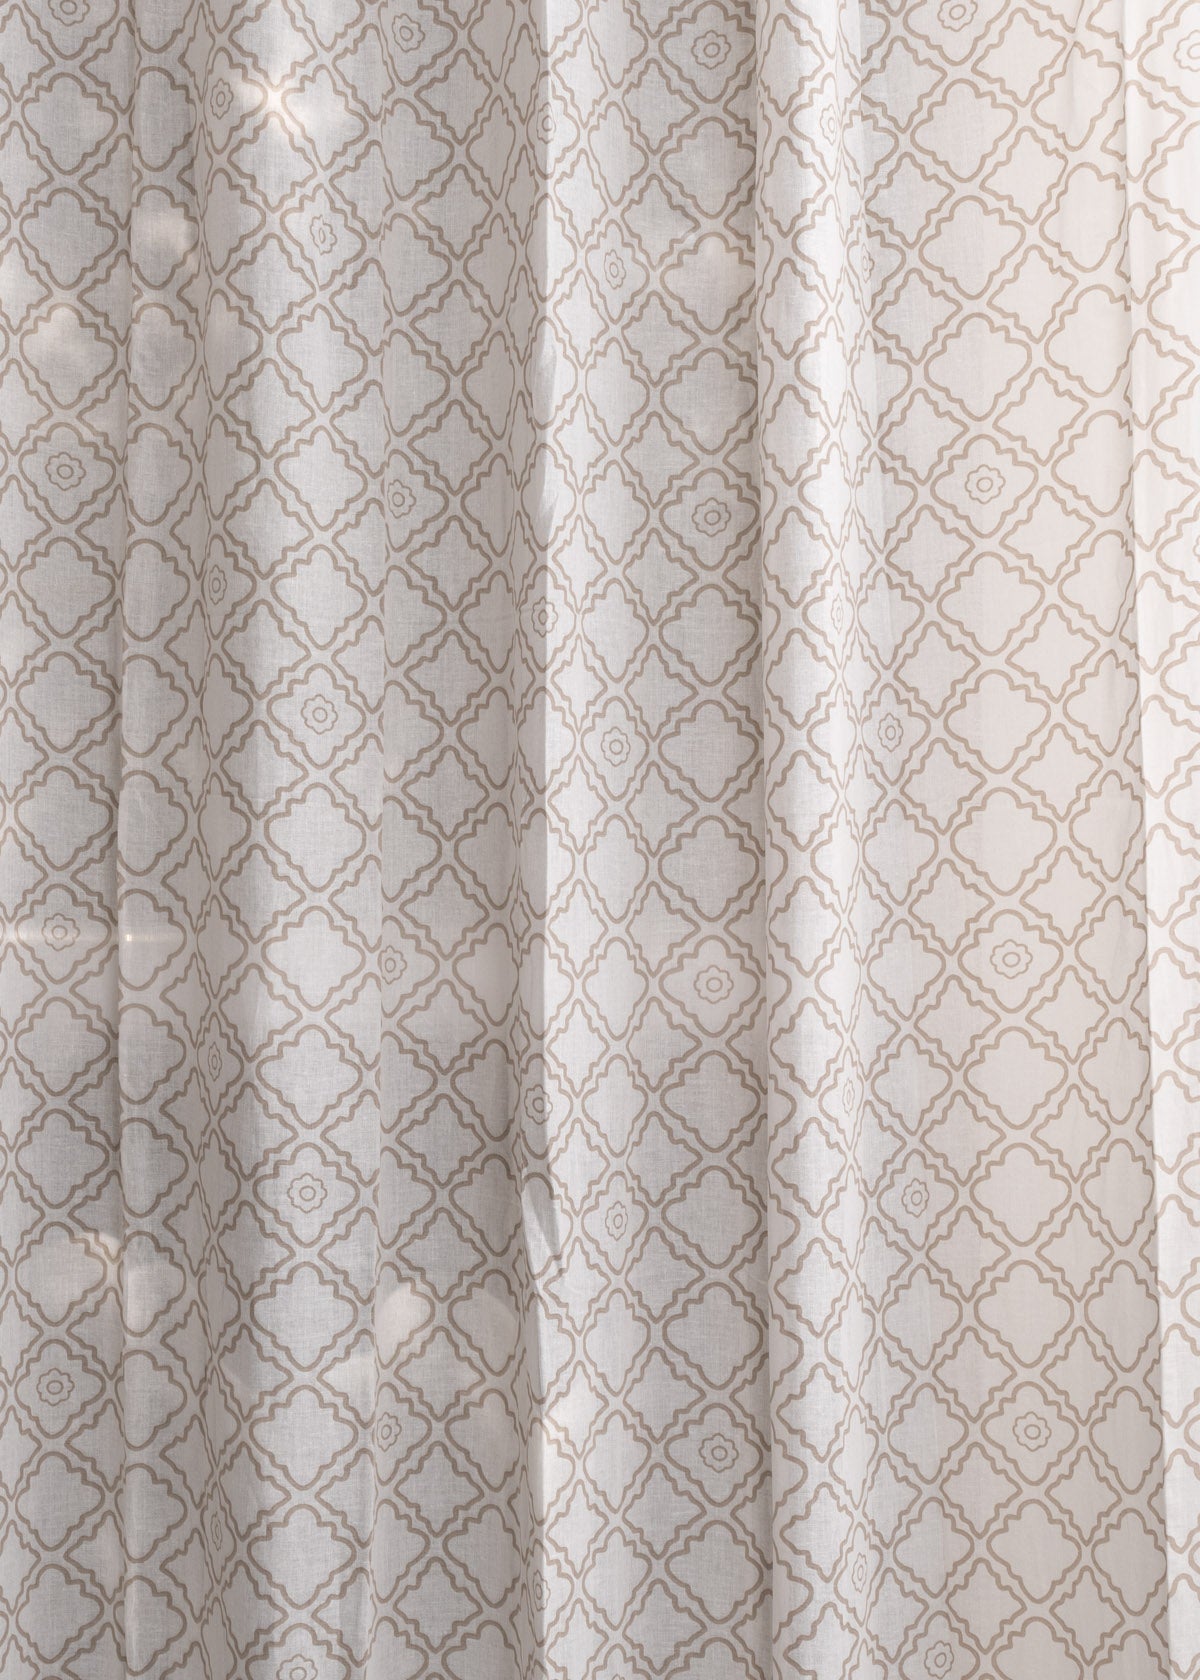 Lattice 100% cotton Sheer Geometric curtain for Living room & bedroom - Light filtering - Walnut Grey - Pack of 1